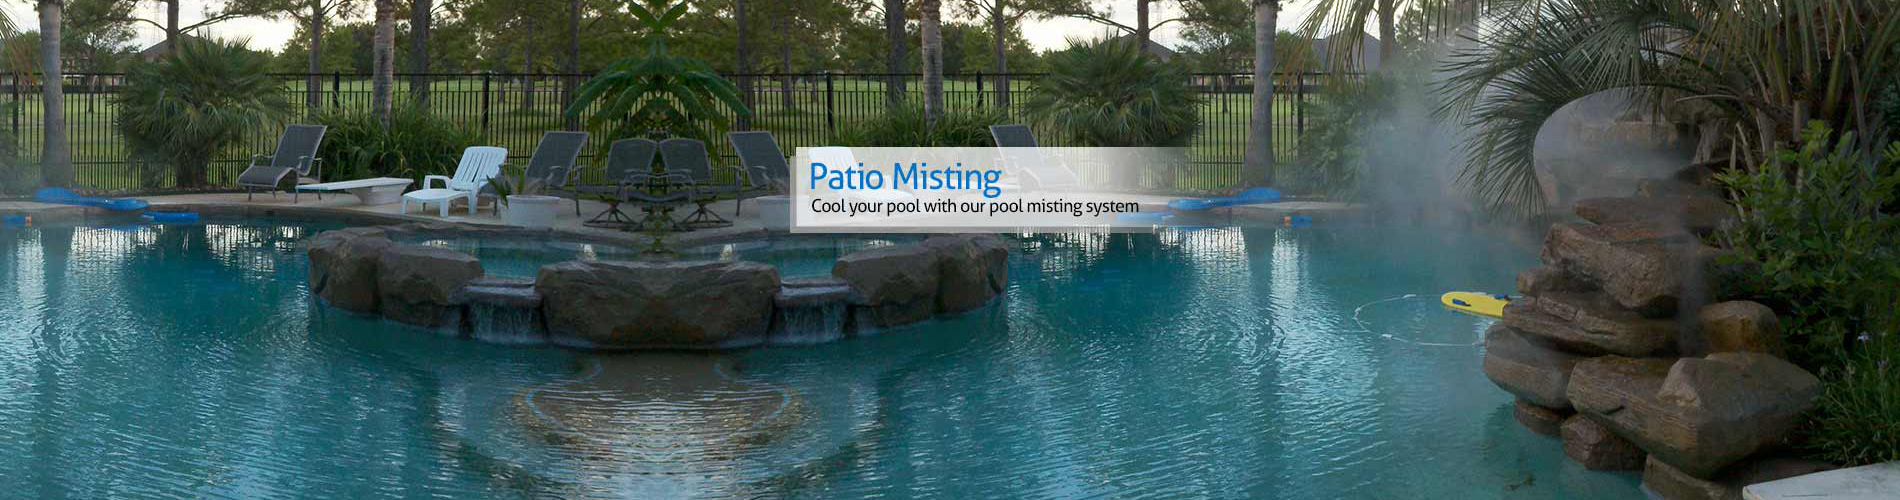 Patio Misting